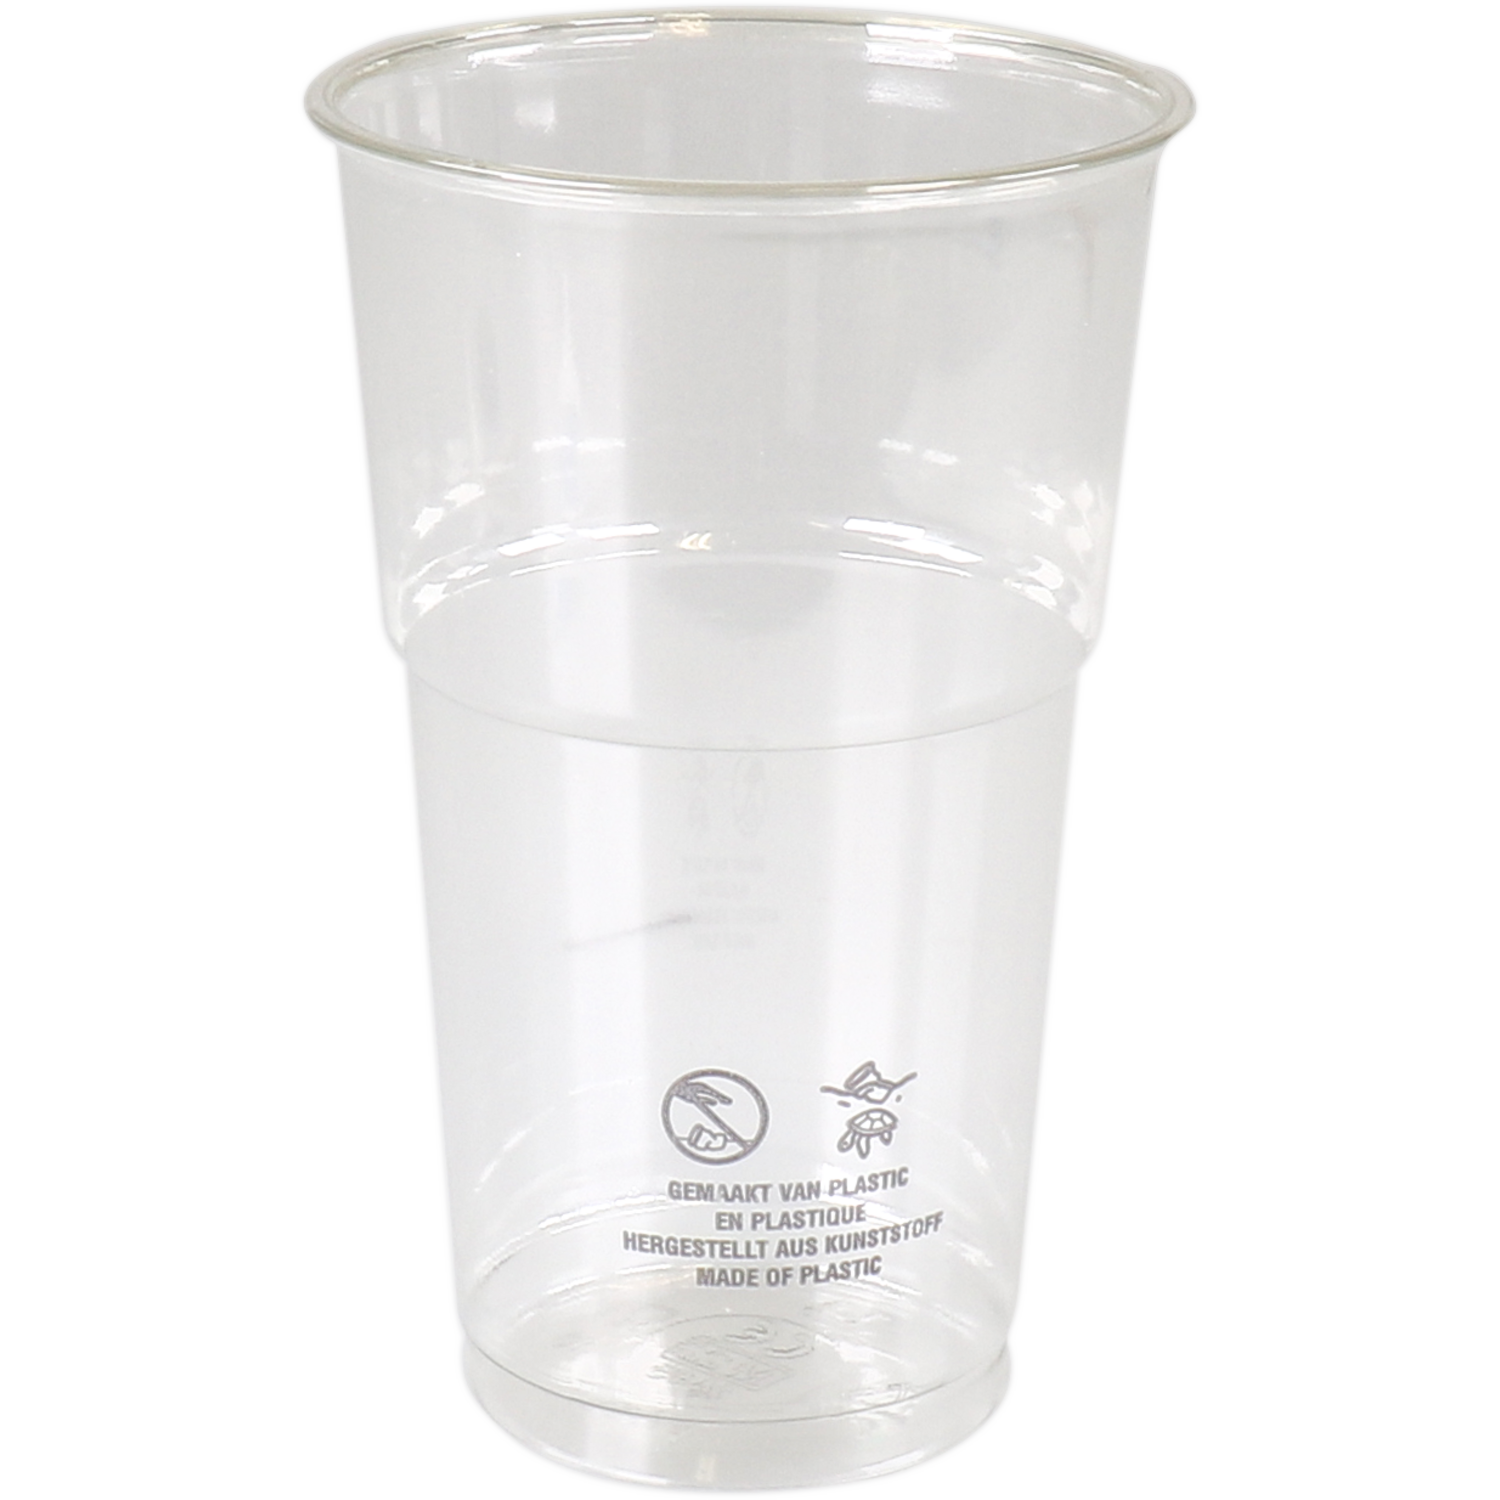 DEPA® Glas, bierglas, schapdoos, gerecycled PET, 300ml, transparant 1